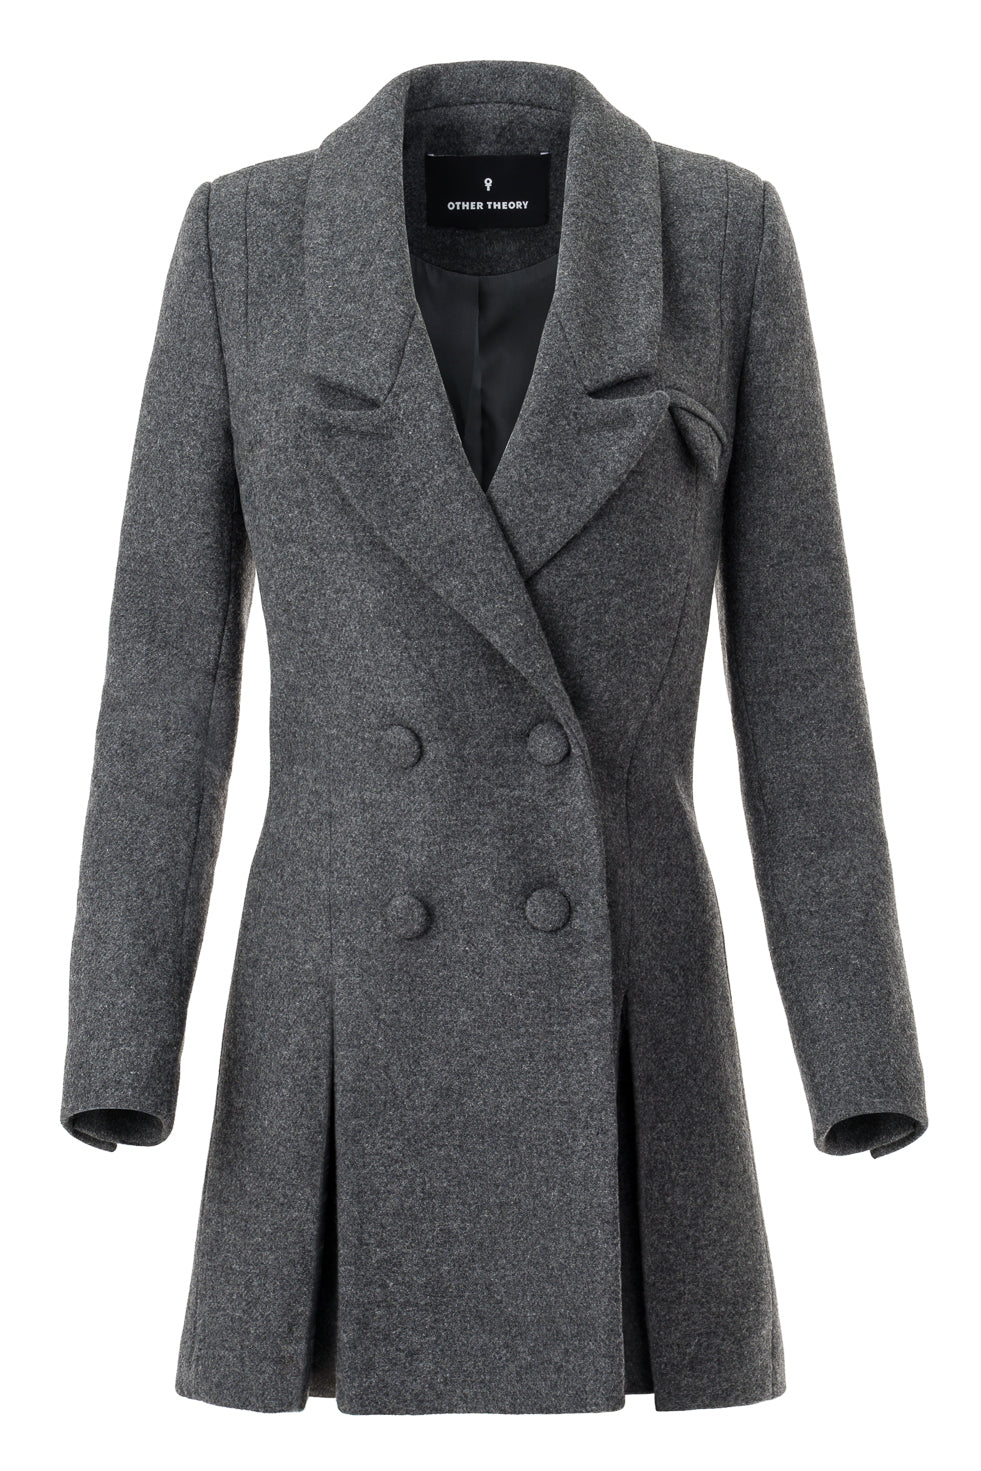 'Amelia' Double-Breasted Grey Coat